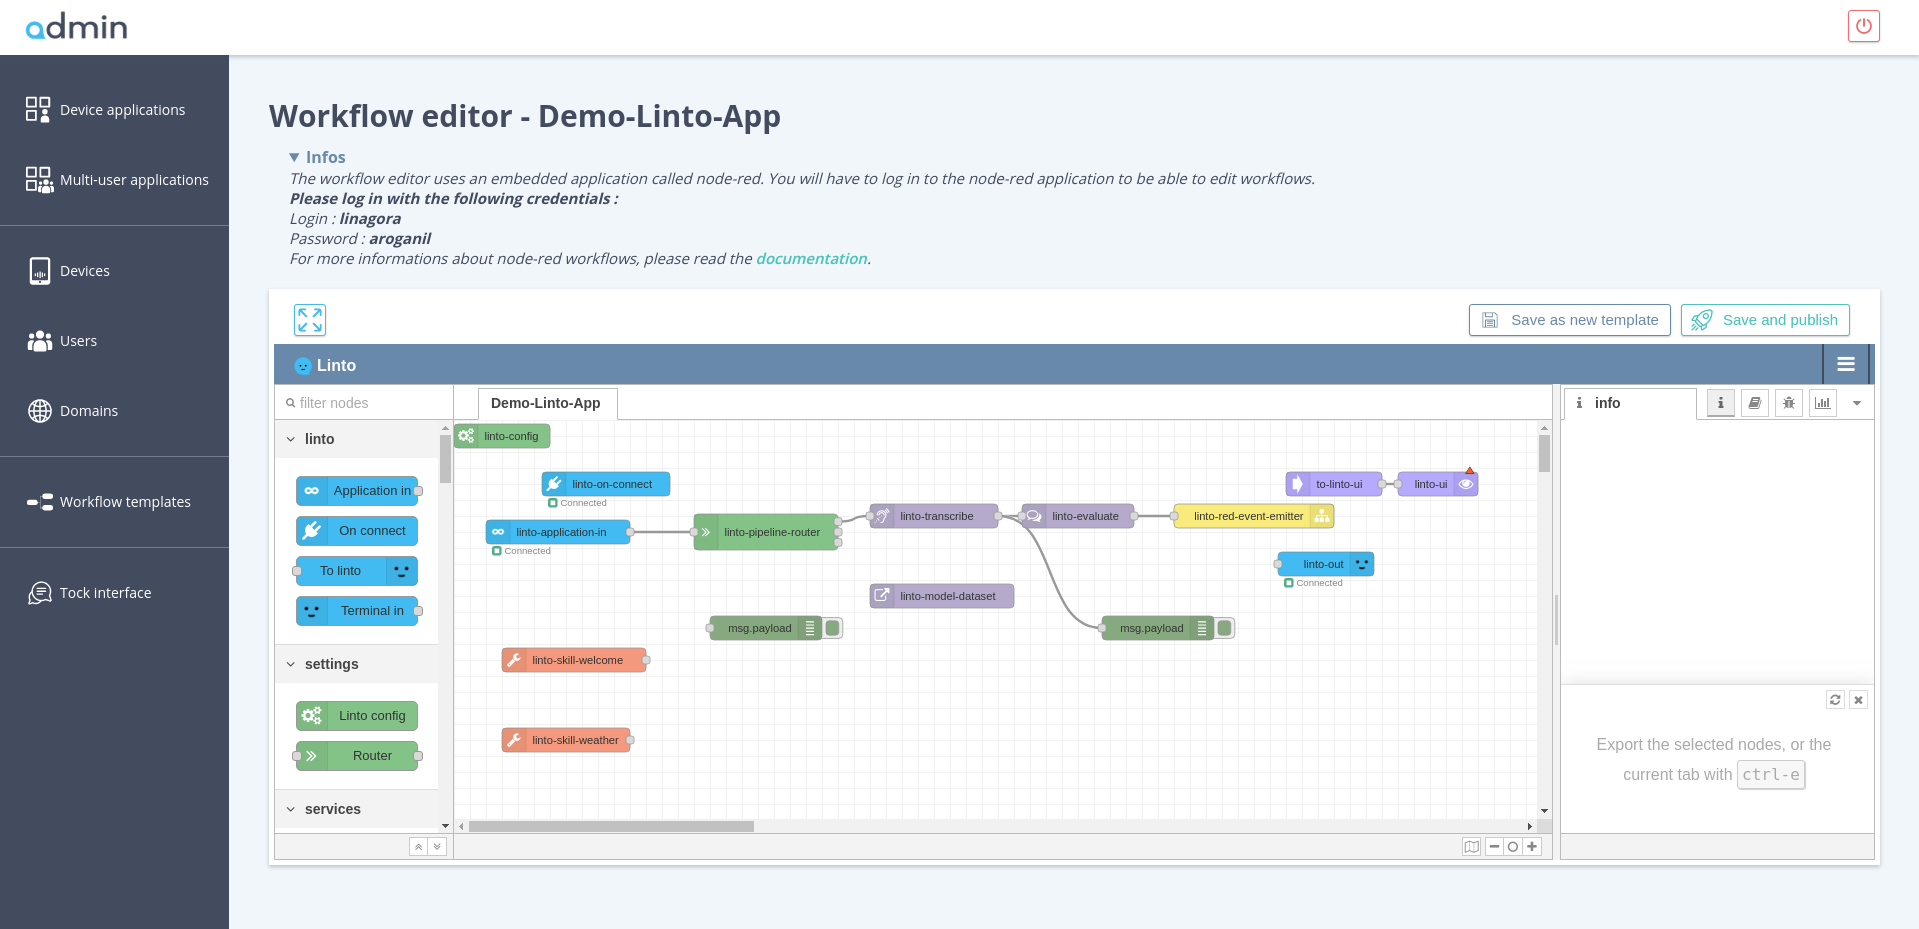 linto admin - edit application workflow